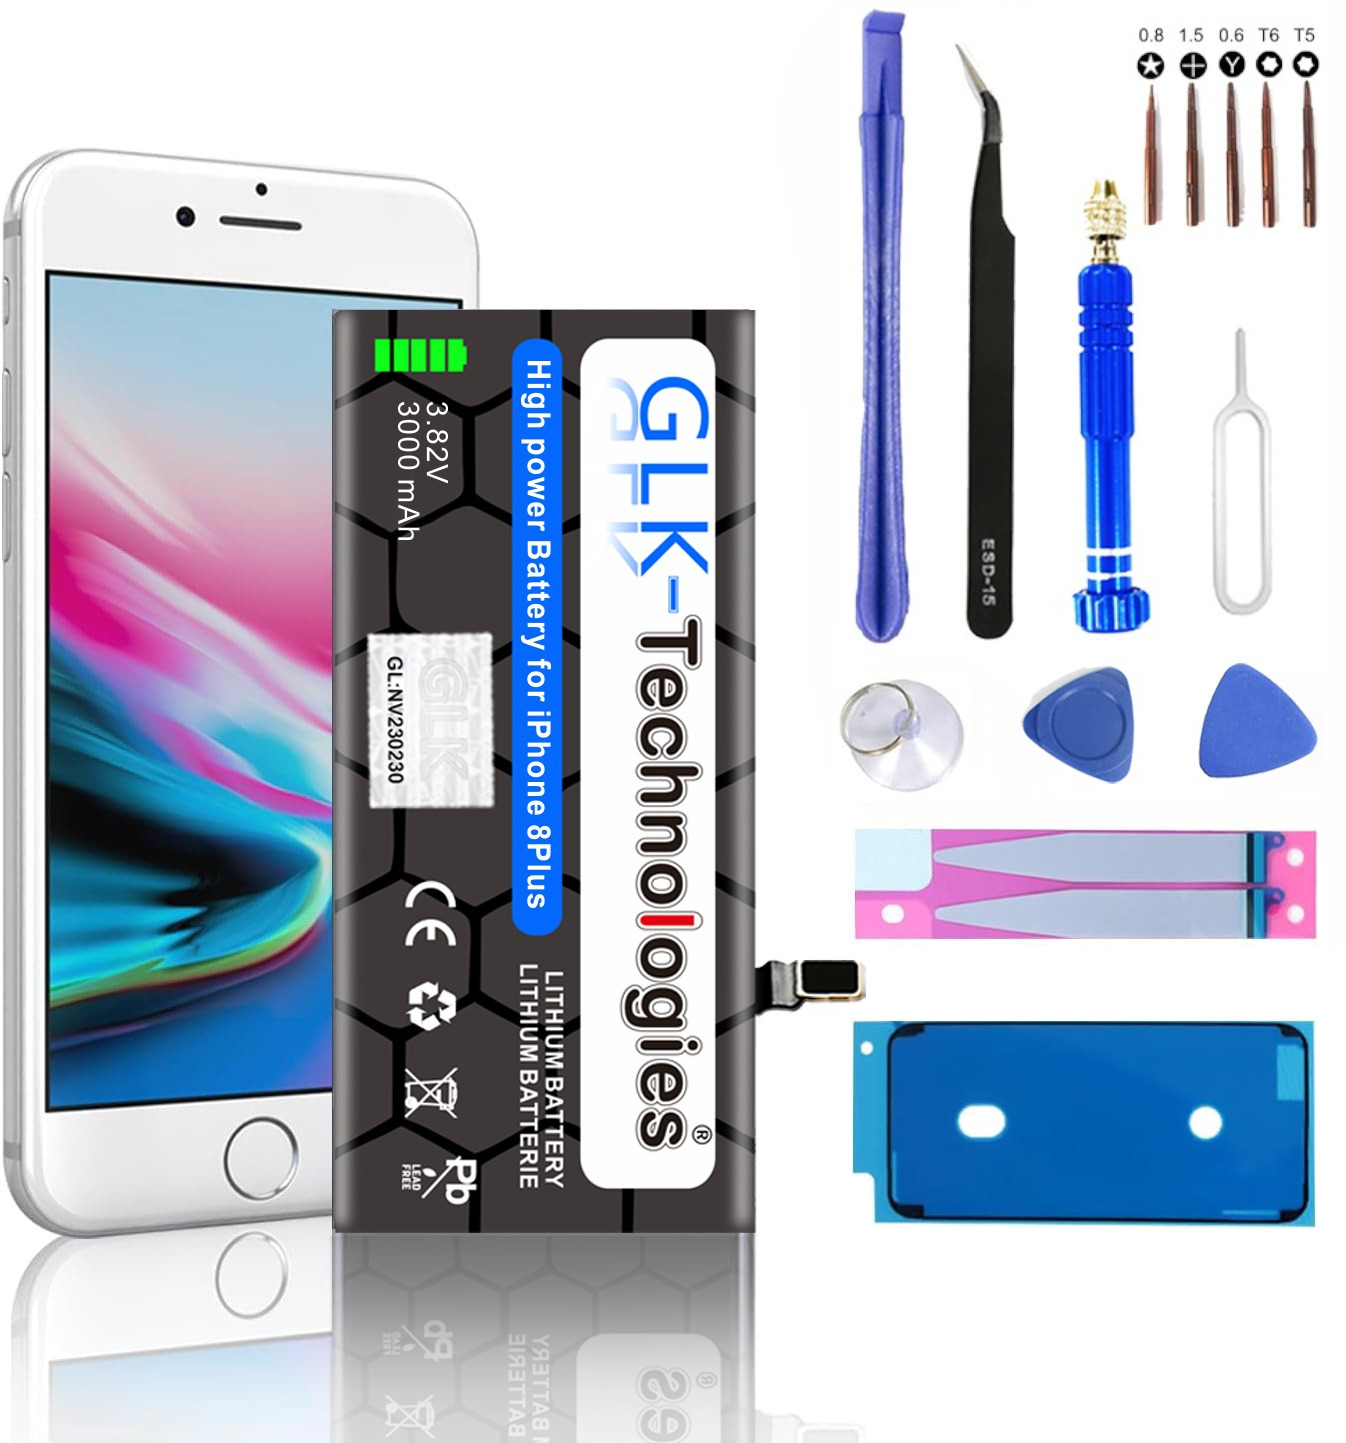 inkl. GLK-TECHNOLOGIES Lithium-Ionen-Akku Plus iPhone Akku Werkzeug Ersatz Smartphone 8